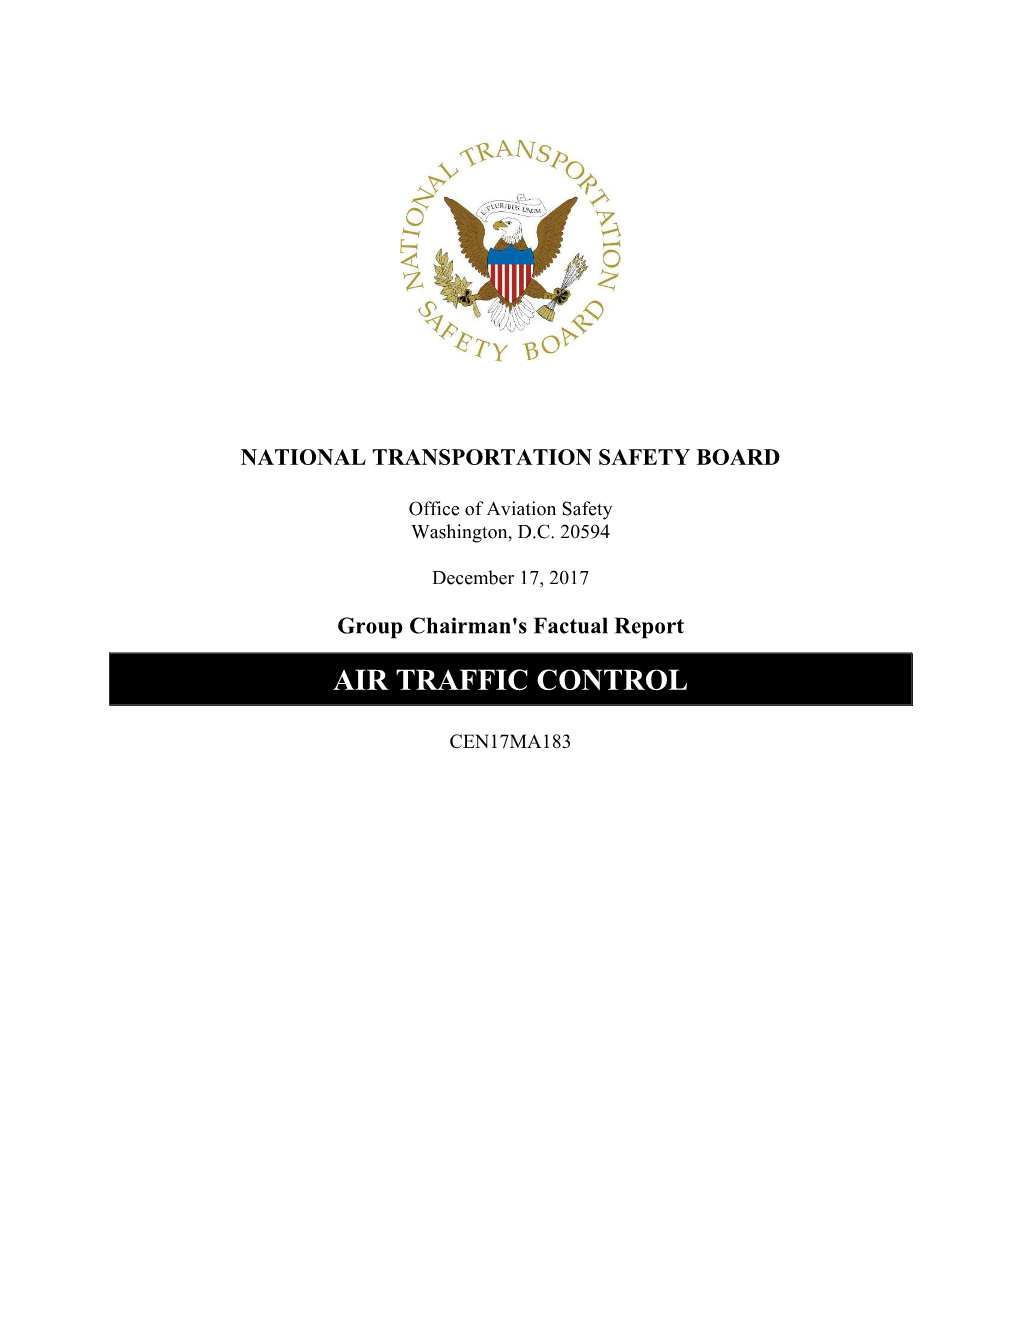 Air Traffic Control Group Factual Report